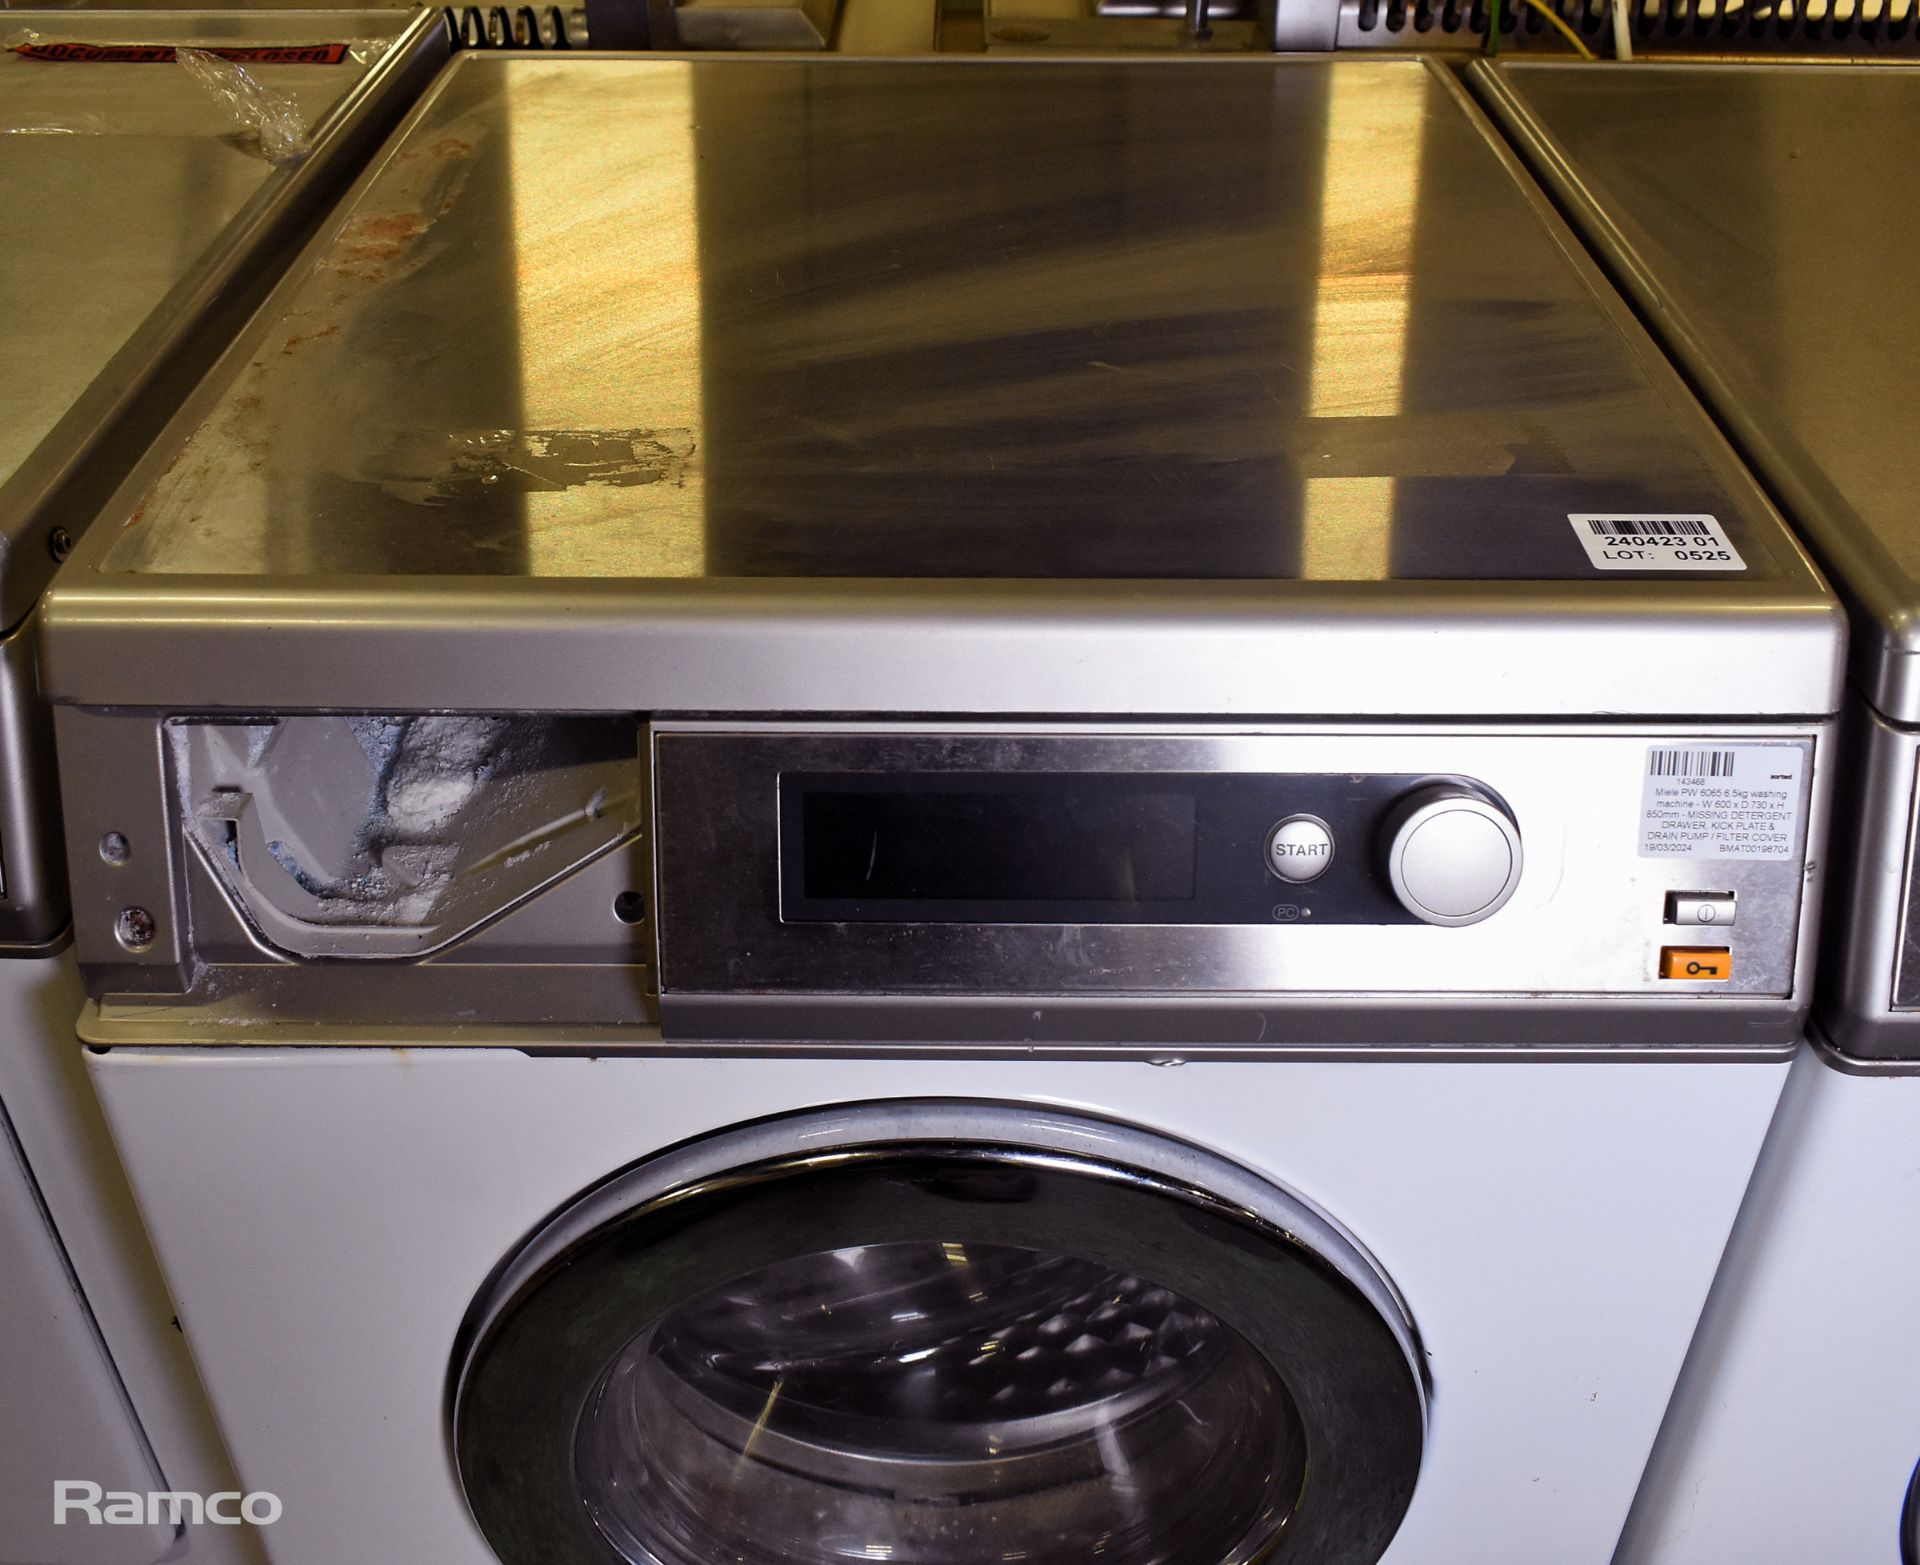 Miele PW 6065 6.5kg washing machine - W 600 x D 730 x H 850mm - MISSING DETERGENT DRAWER - Image 2 of 4